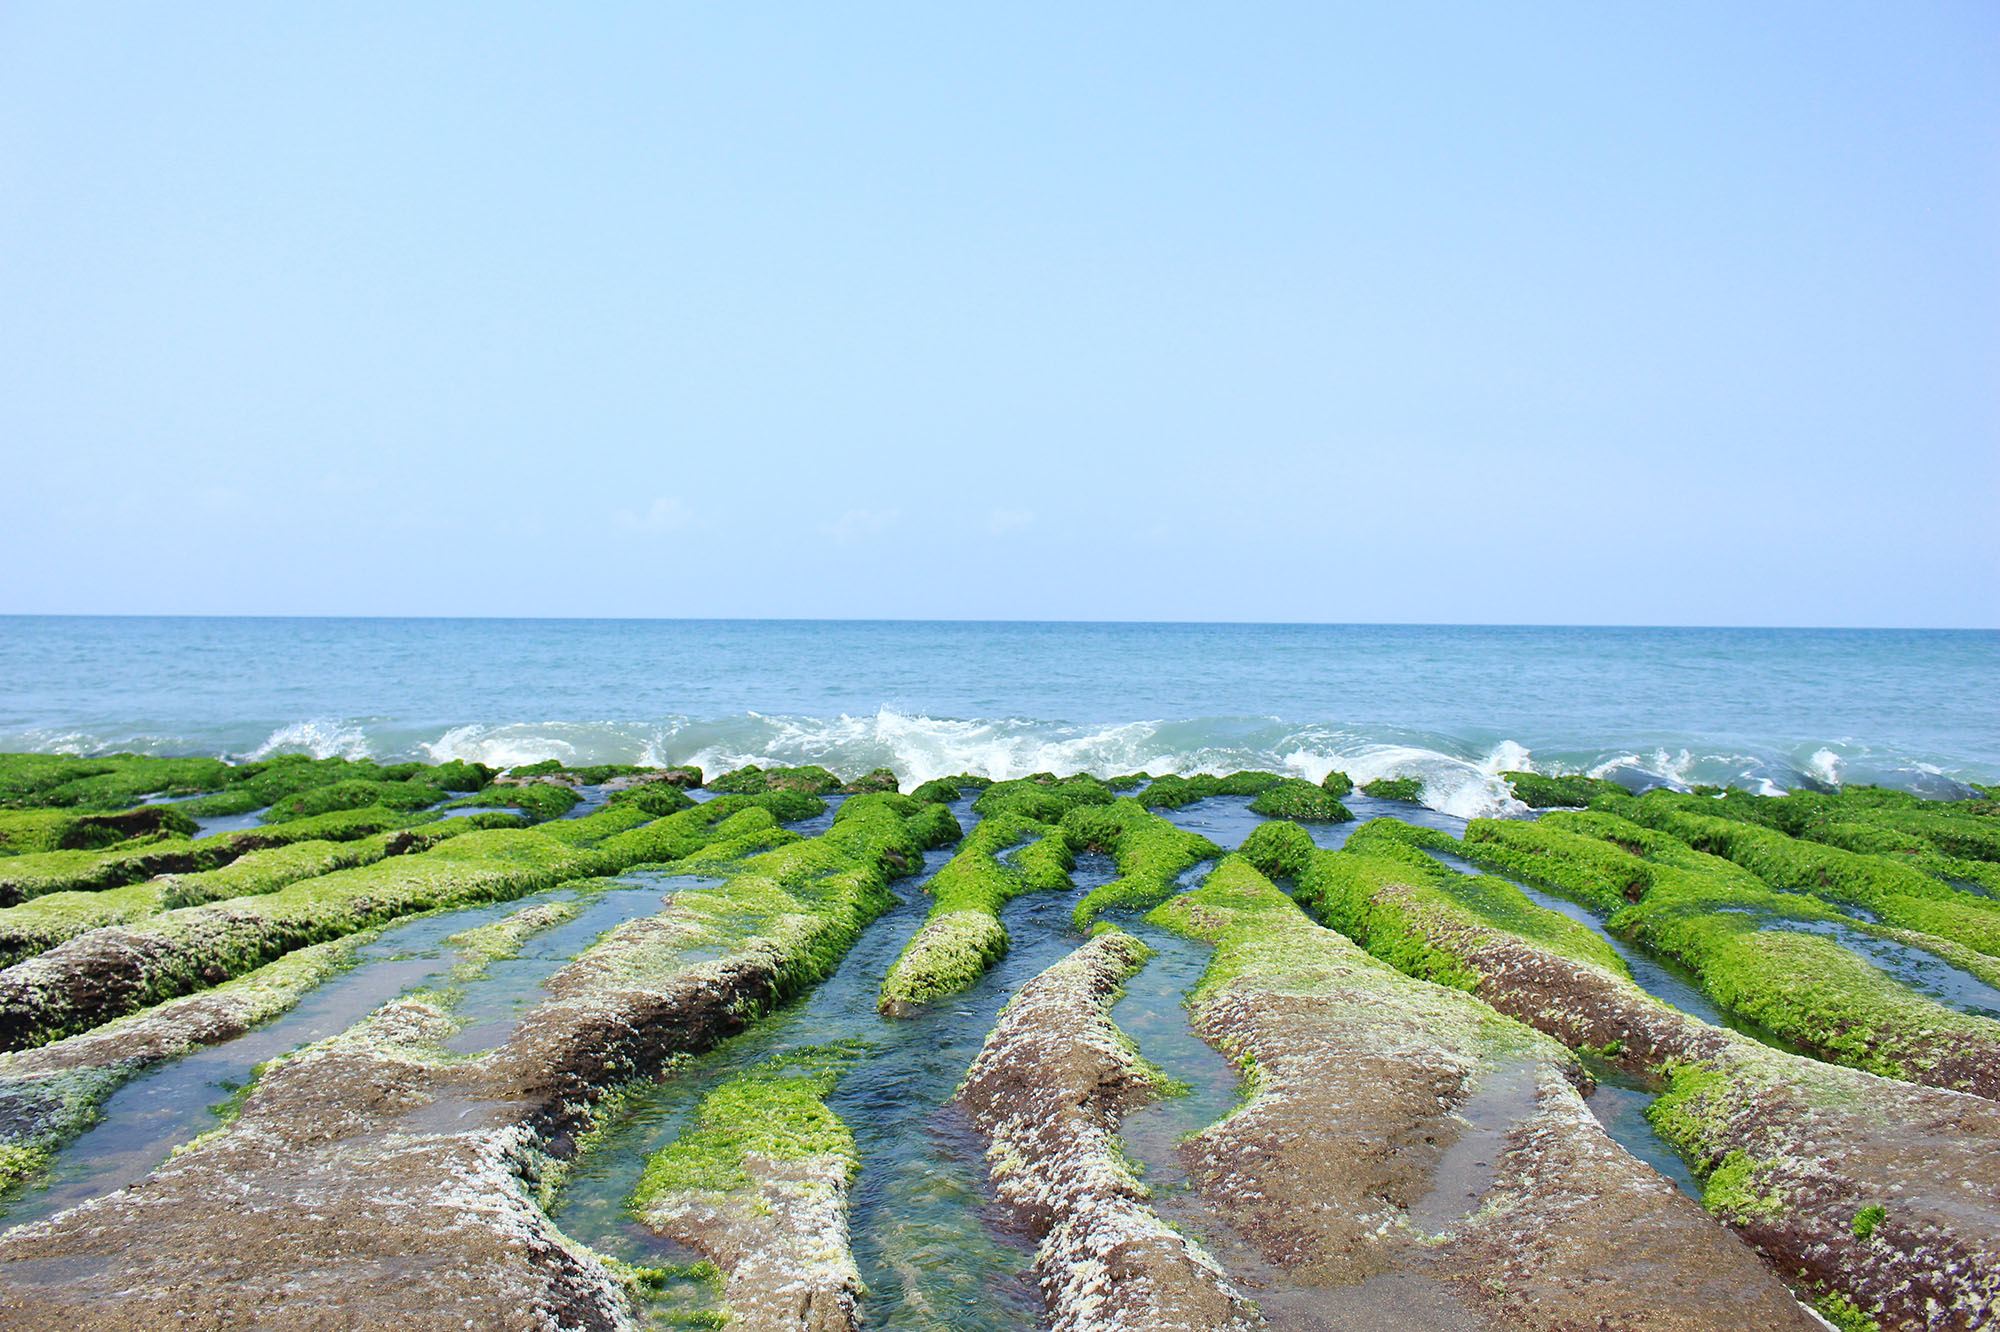 Algae on shoreline. Chang Patrick | Unsplash